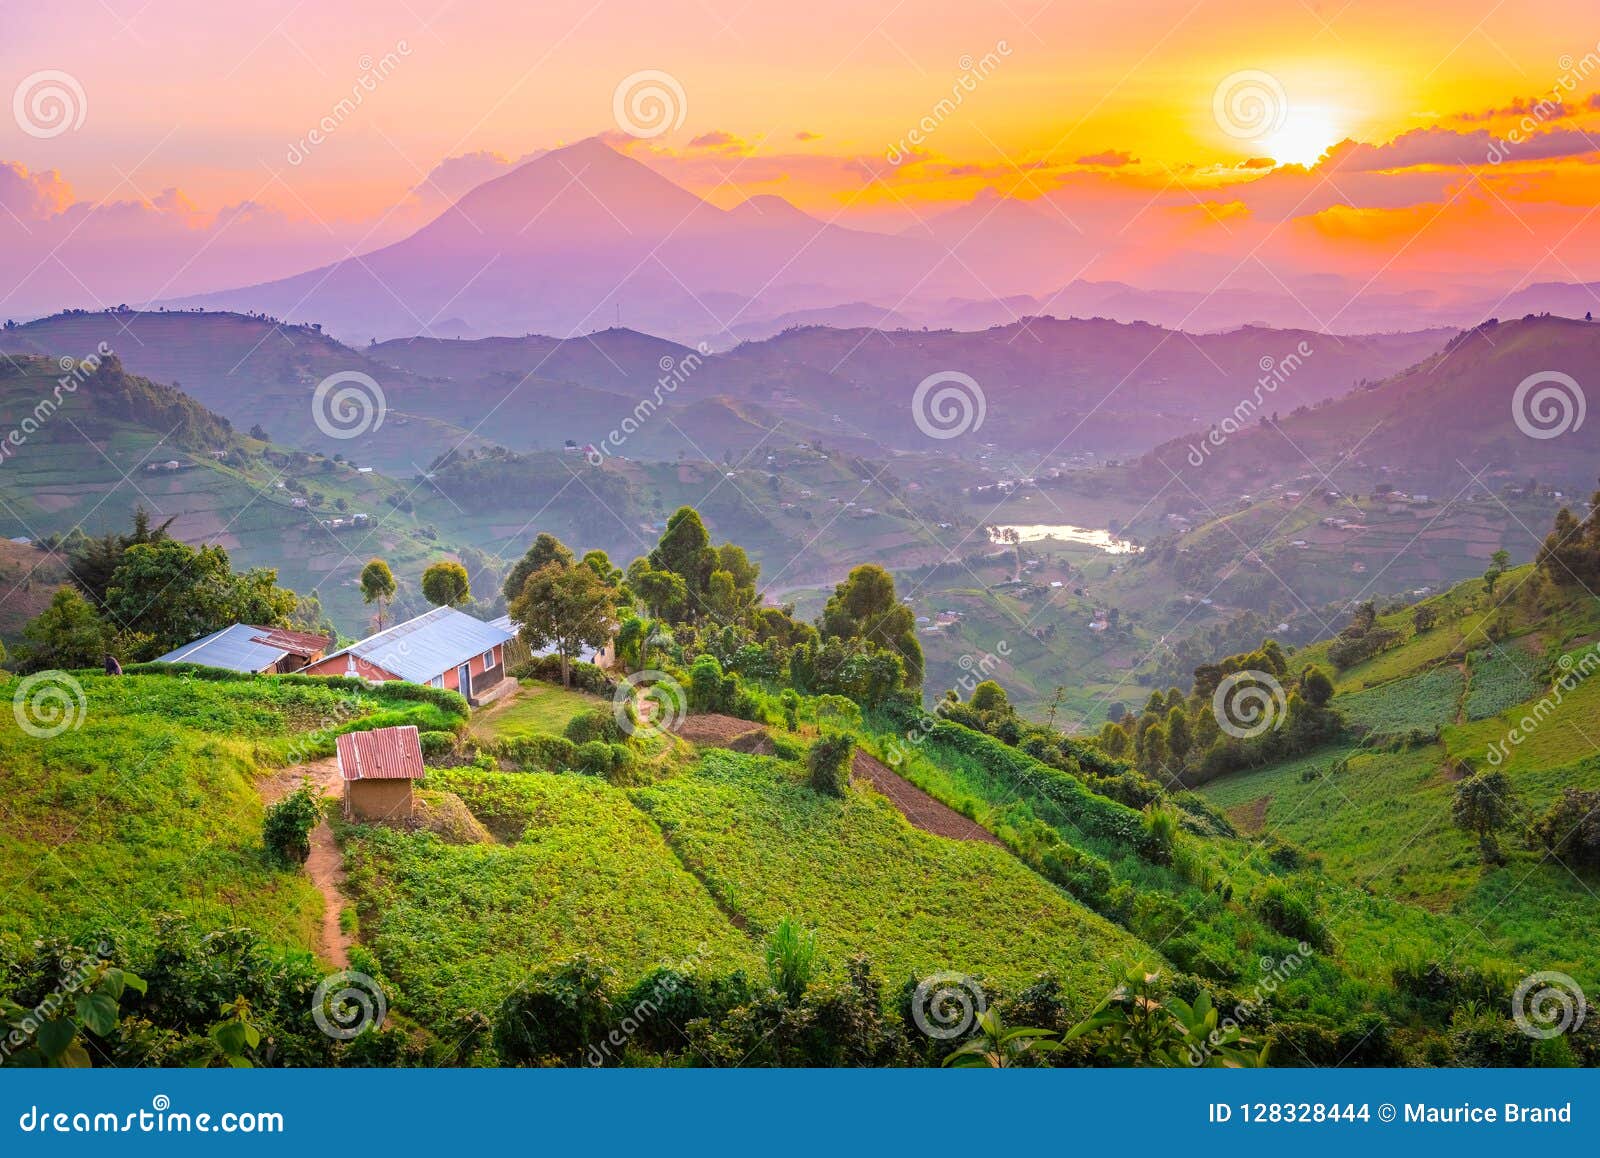 kisoro uganda beautiful sunset over mountains and hills